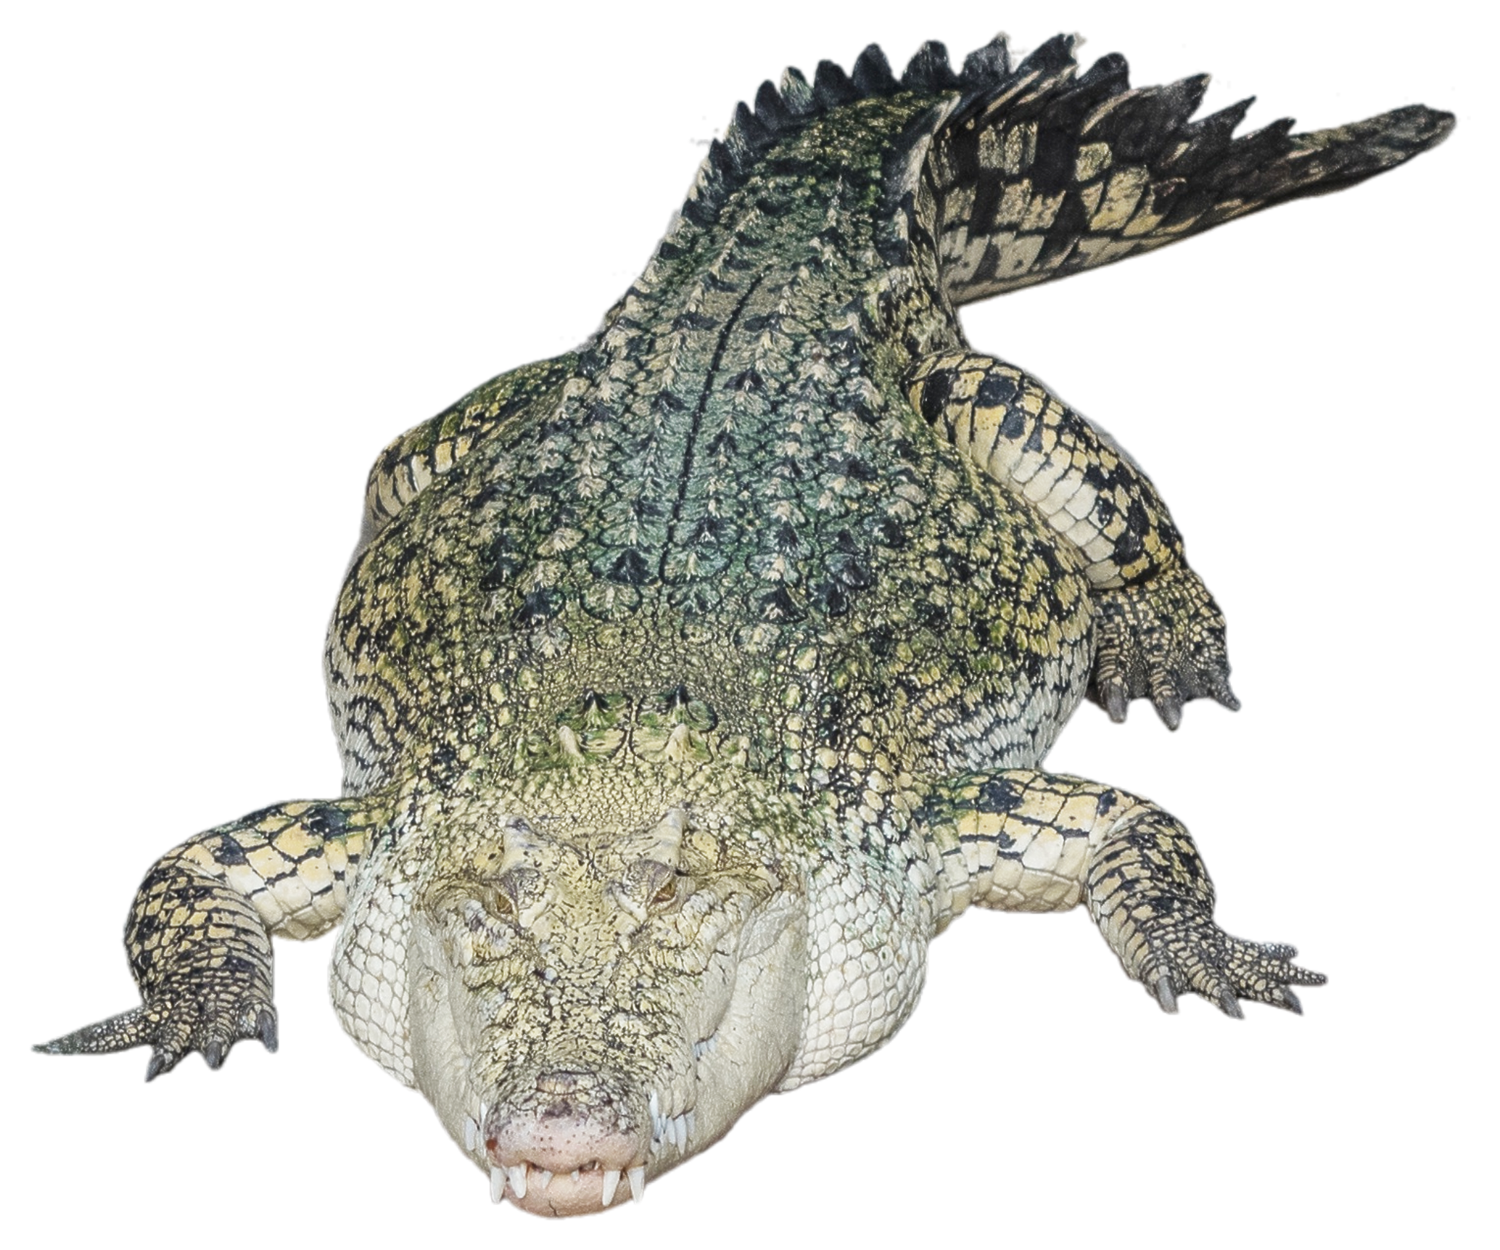 Crocodile Alligator Png Transparent Image - Crocodile, Transparent background PNG HD thumbnail